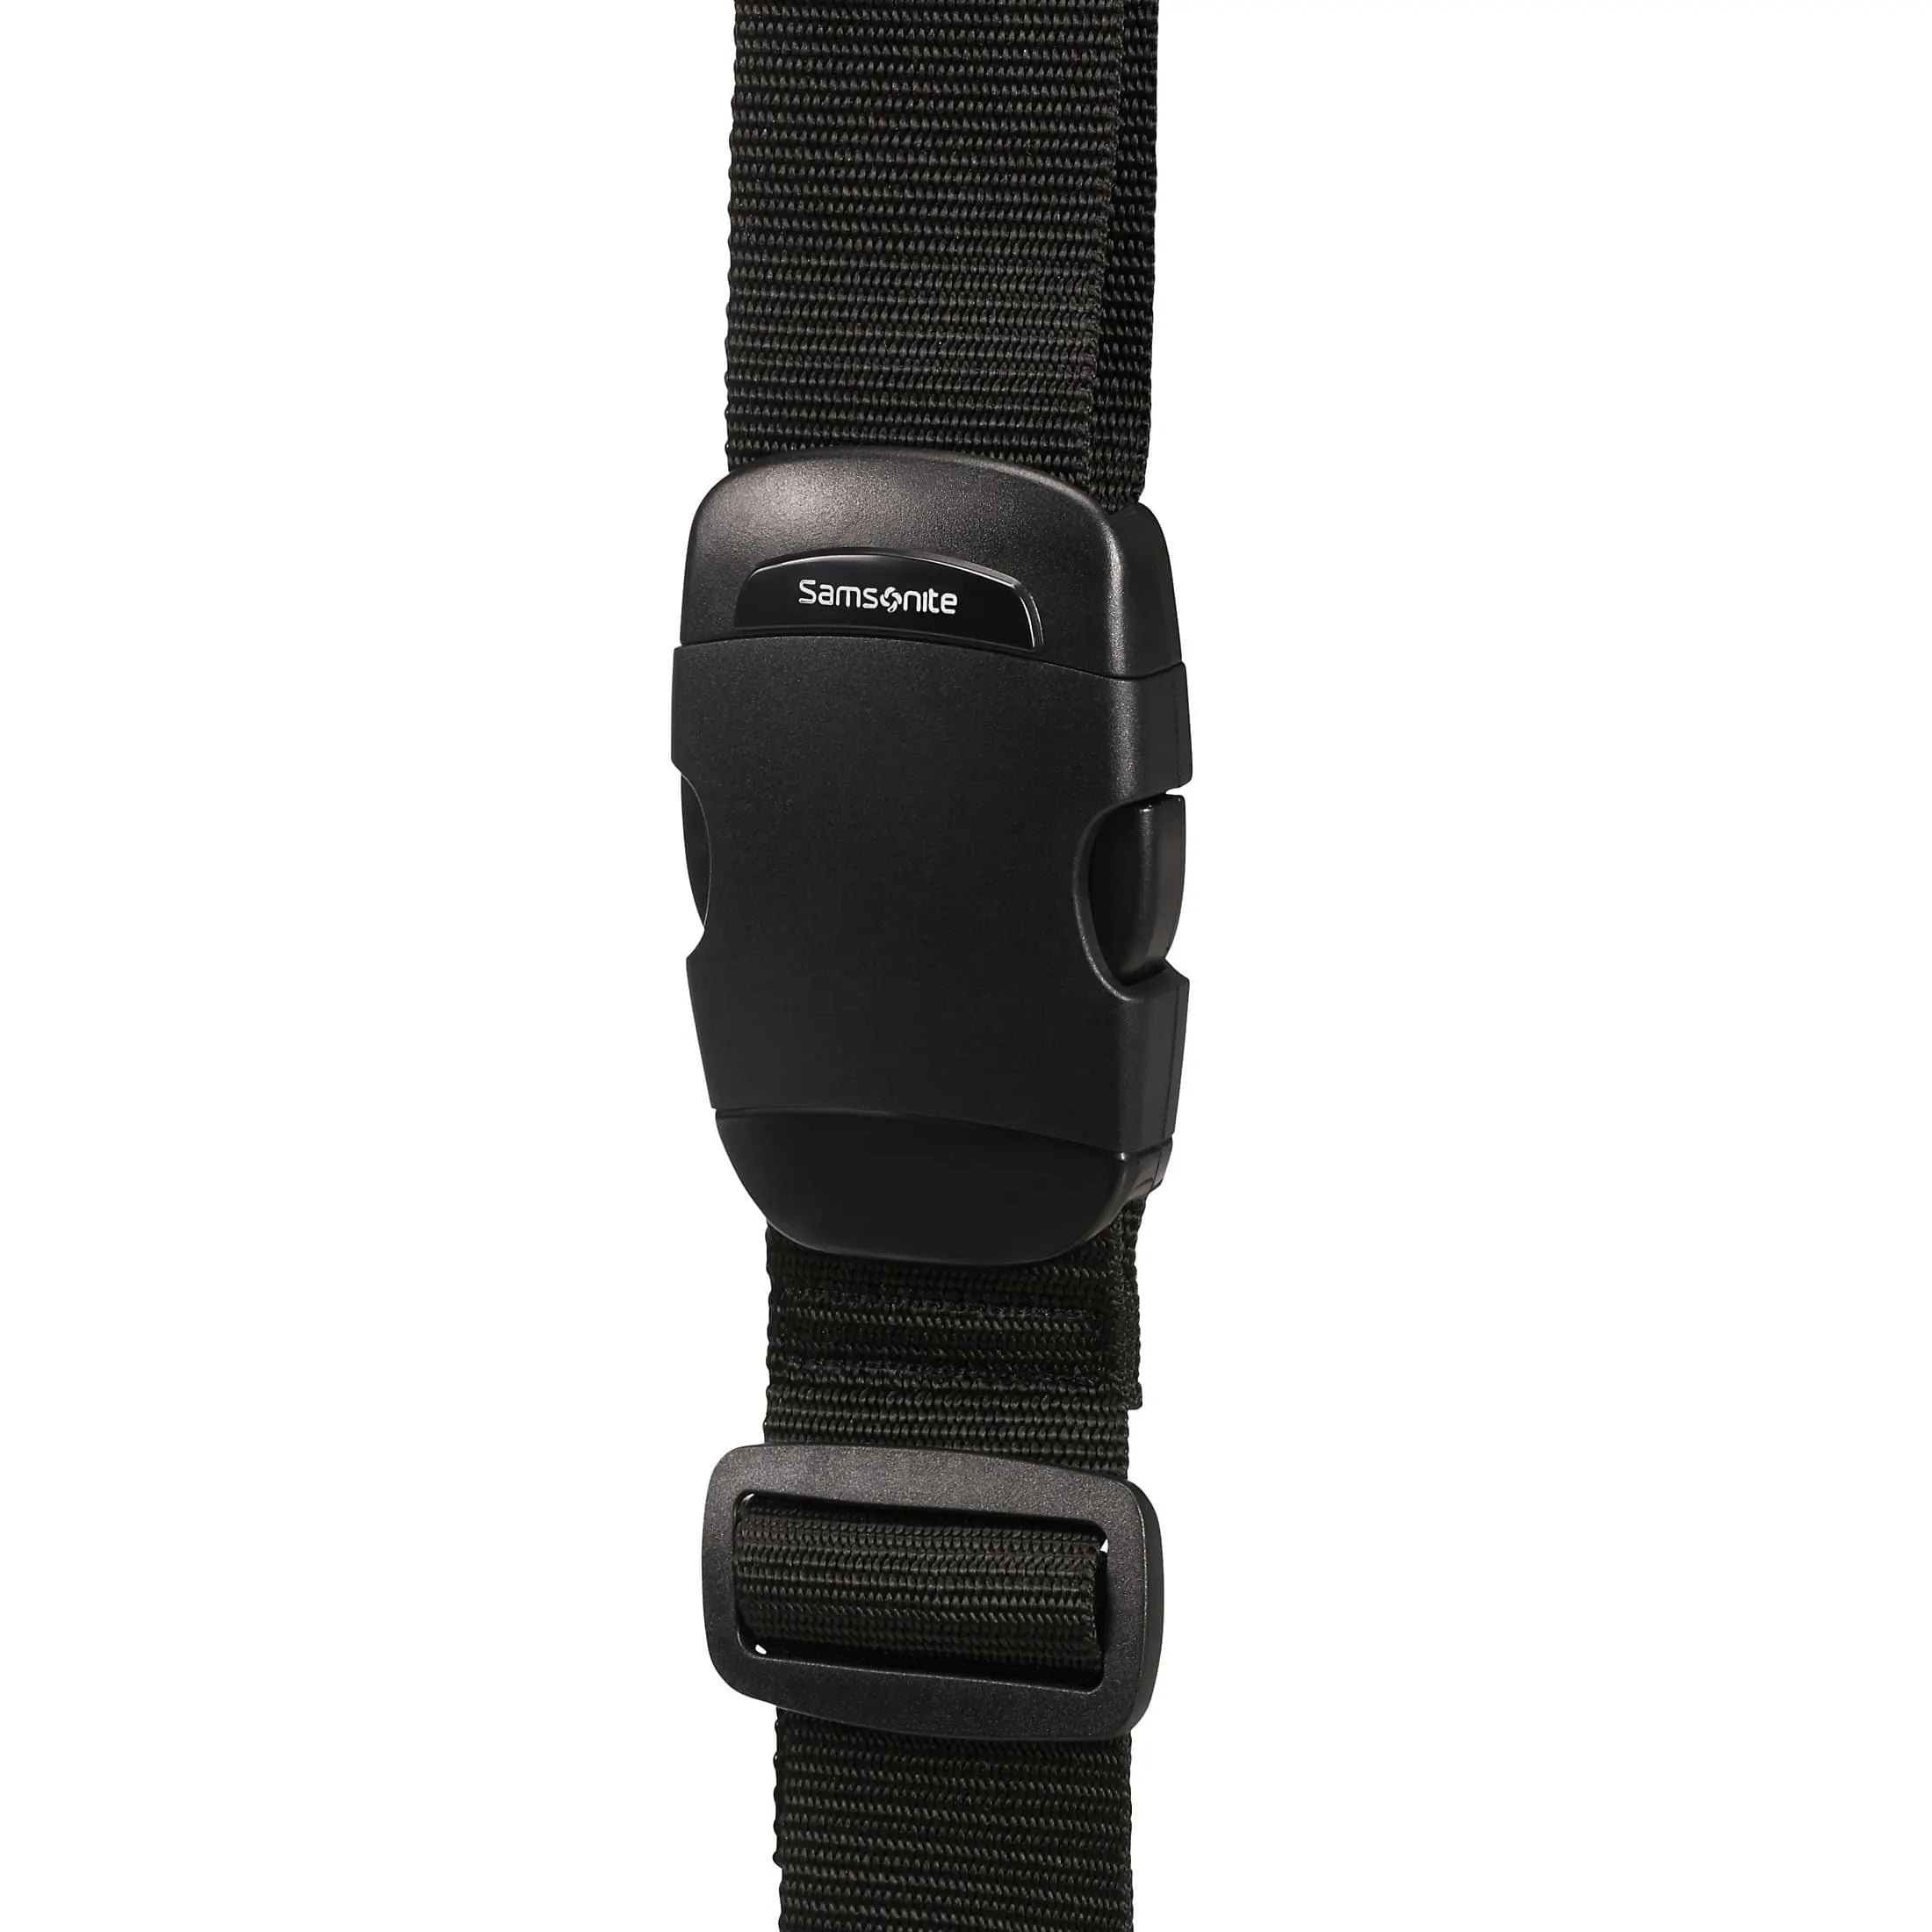 Samsonite Travel Accessories Kofferband 50mm - black